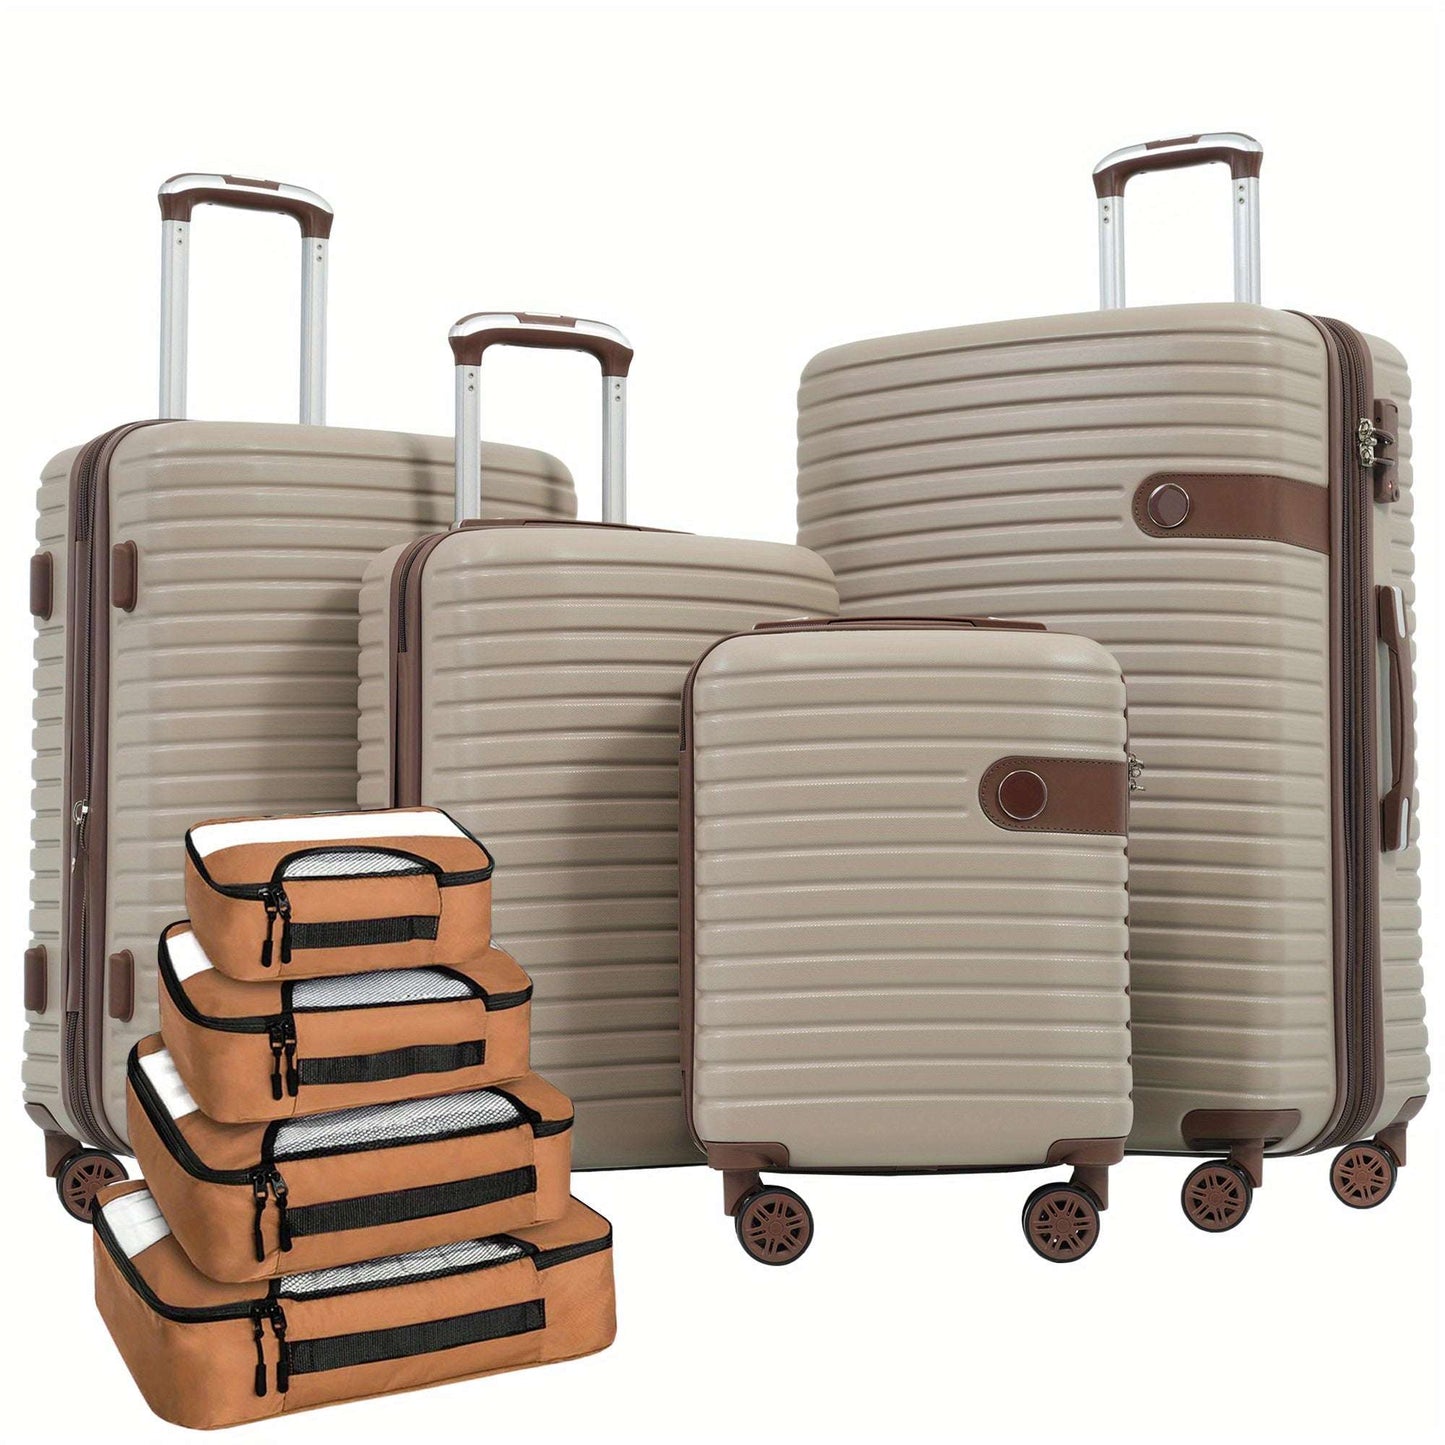 4 Piece Luggage Set Suitcase Set, ABS Hard Shell Lightweight Expandable Travel Luggage with 4 Packing Cubes, TSA Lock 184 Luggage OK•PhotoFineArt OK•PhotoFineArt